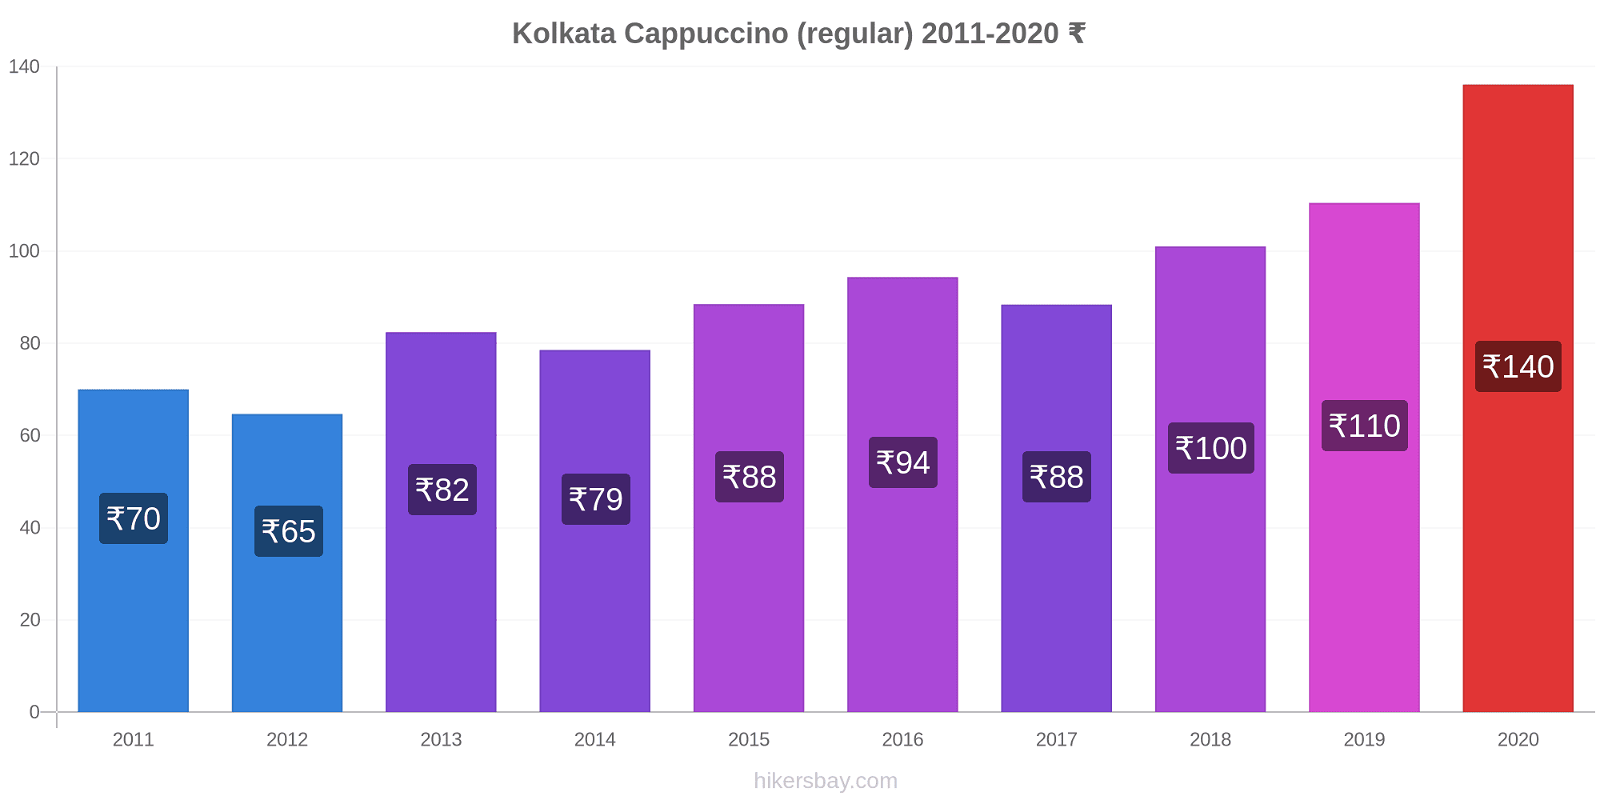 Kolkata price changes Cappuccino (regular) hikersbay.com